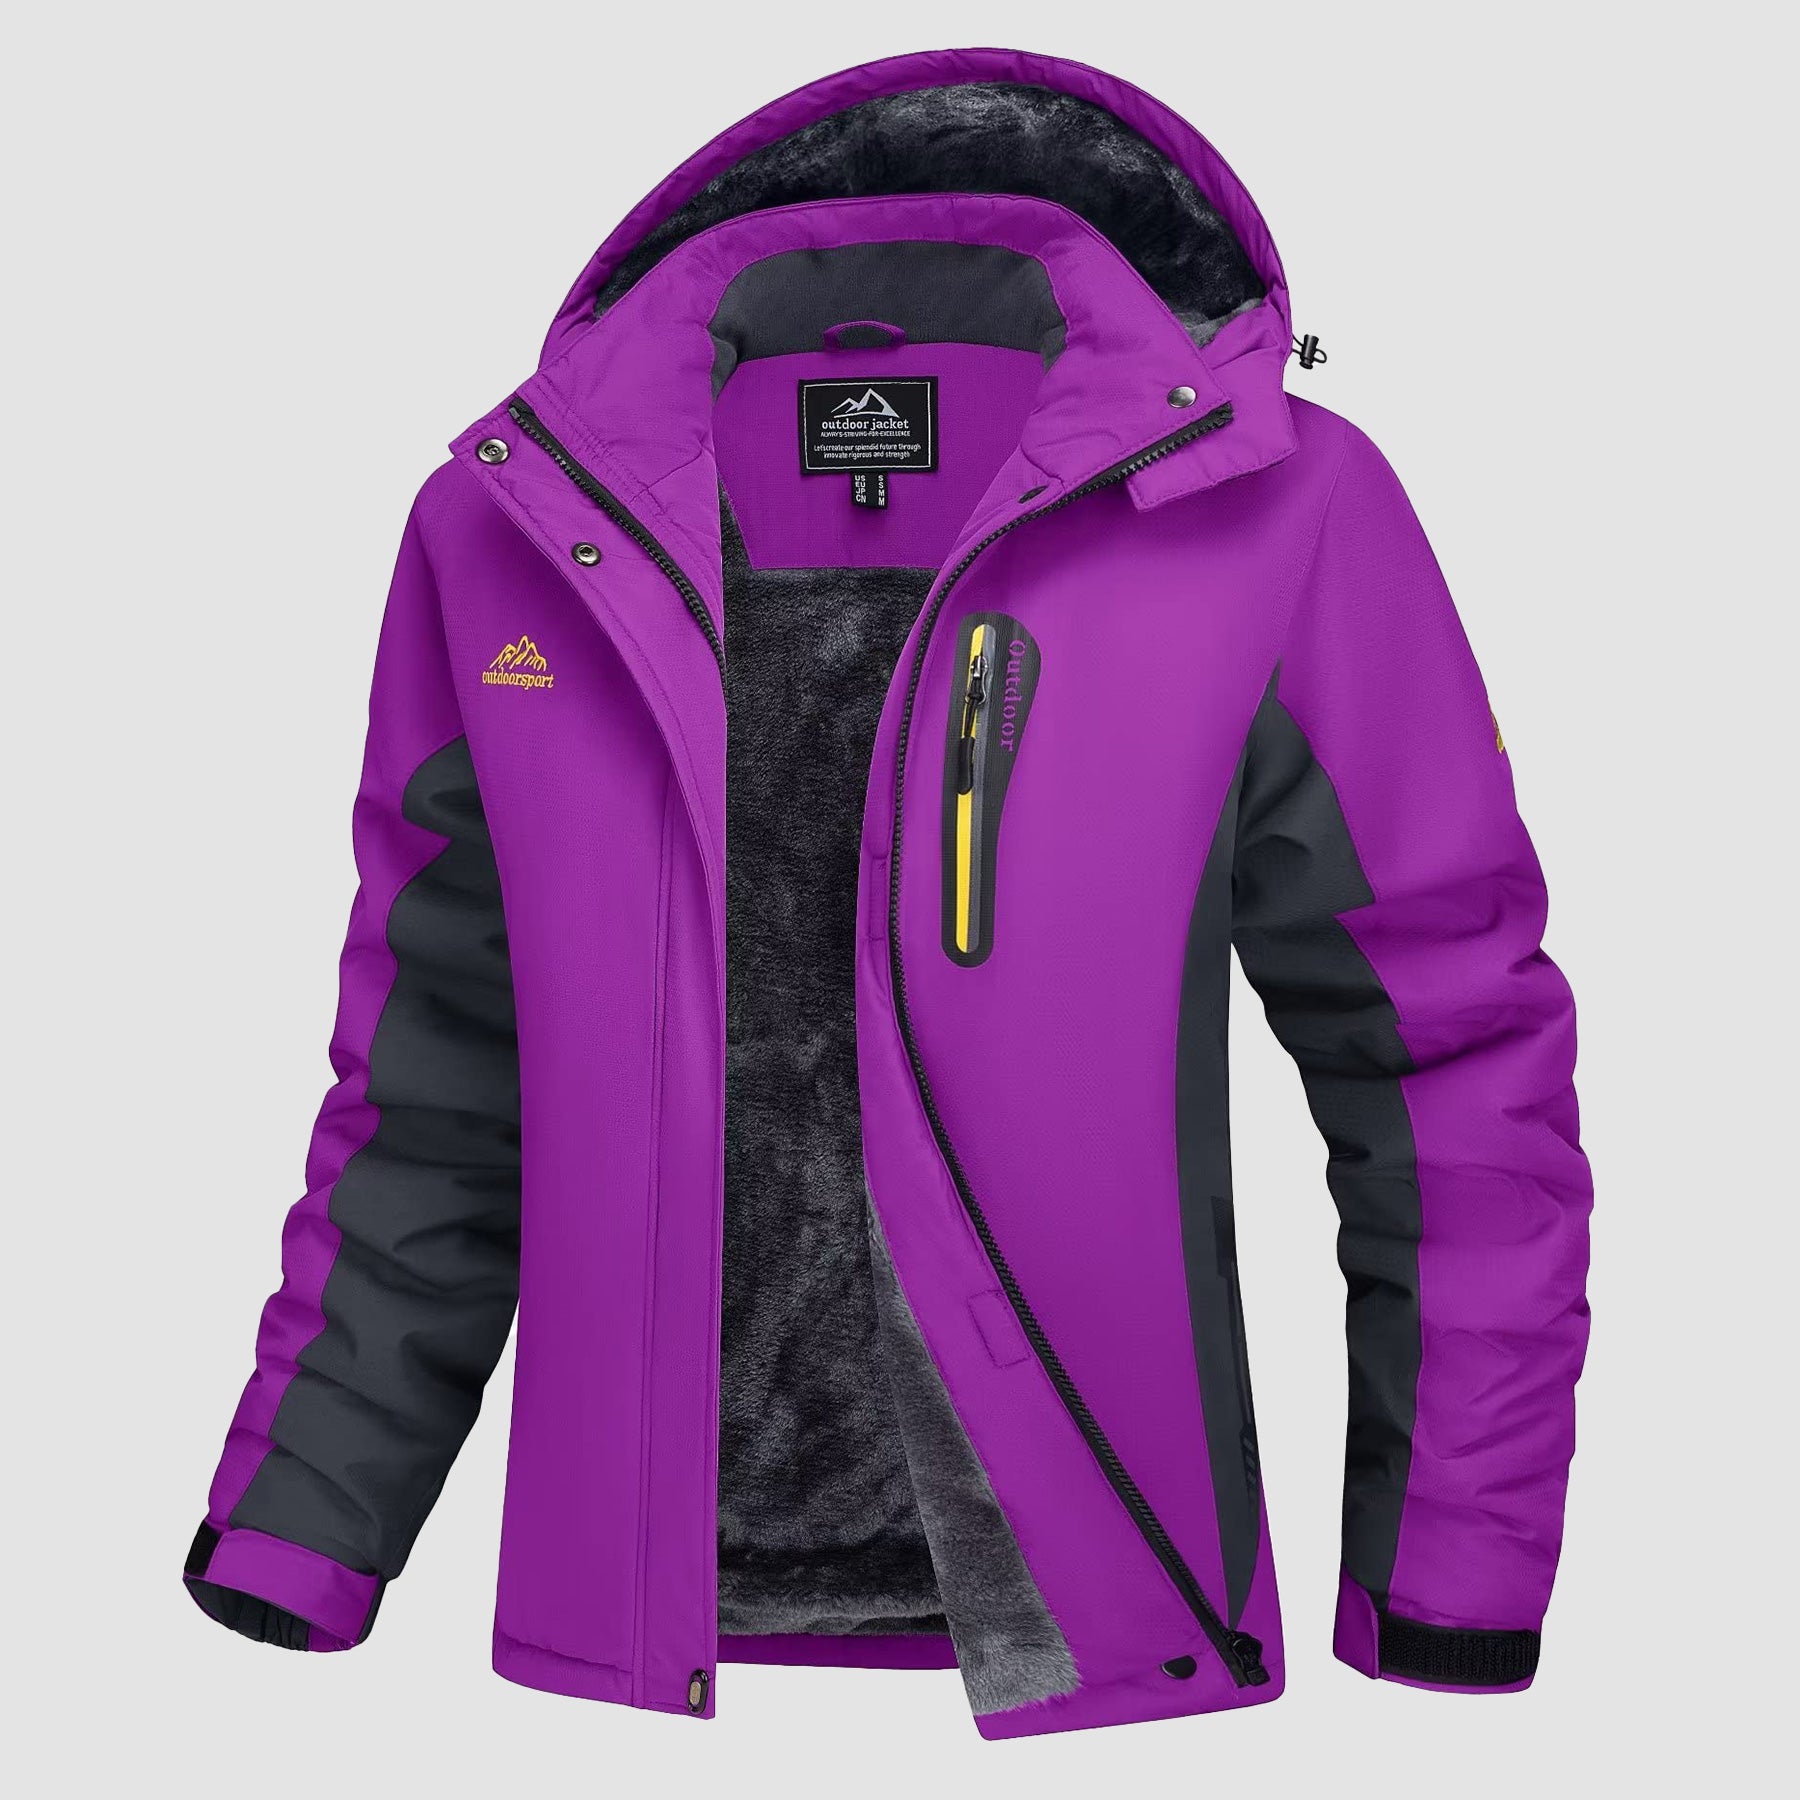 Clearance Sale - Millet - Women's - LD Composite Primaloft - pink Jacket -  size Europa M - / US size S-M / - Goskand Ski & Soccer Store